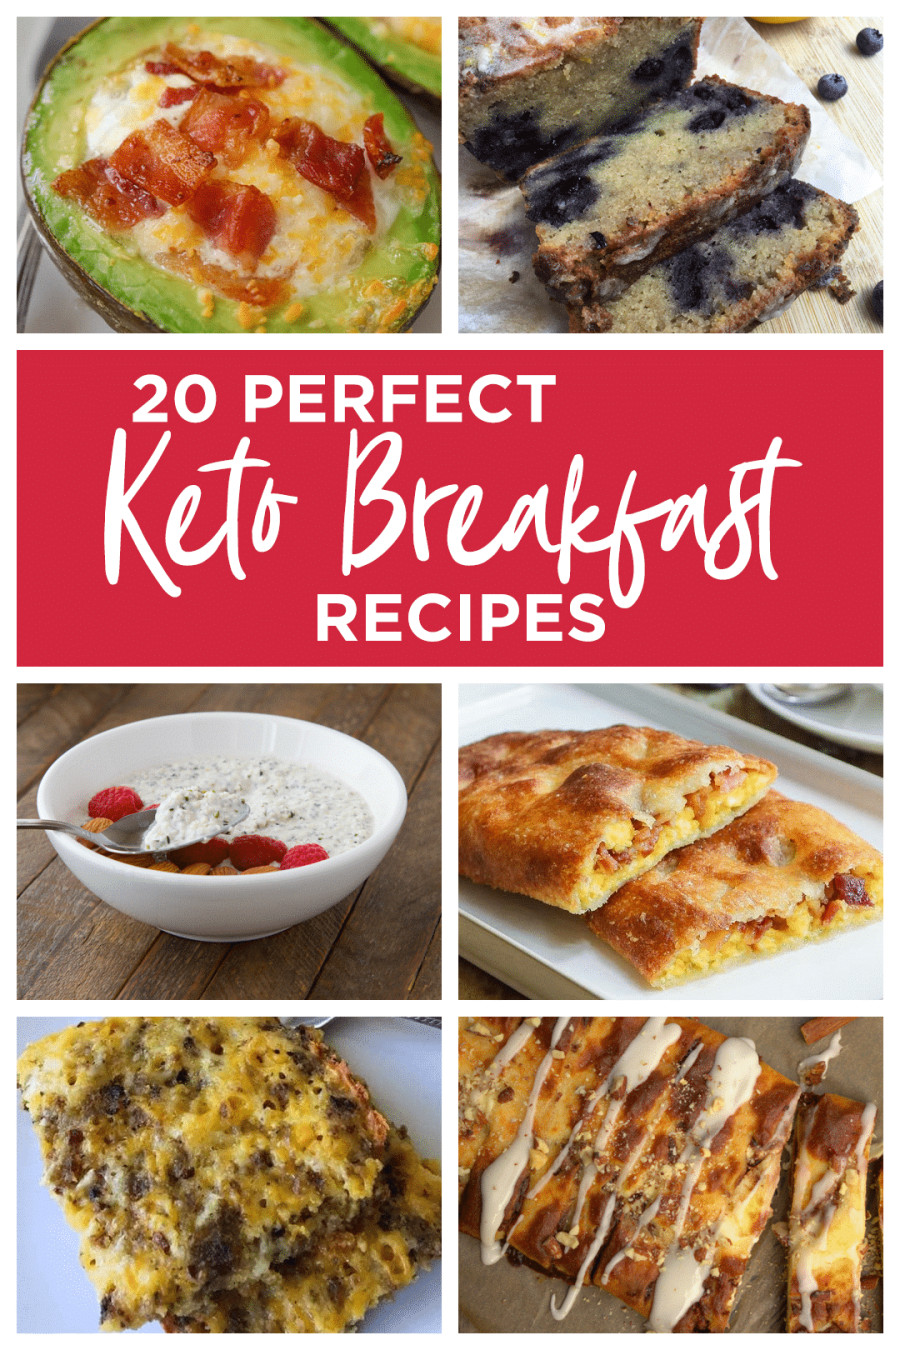 Low Carb Diet Food List Breakfast Ideas
 Keto Breakfast Recipes 20 Perfect Keto & Low Carb